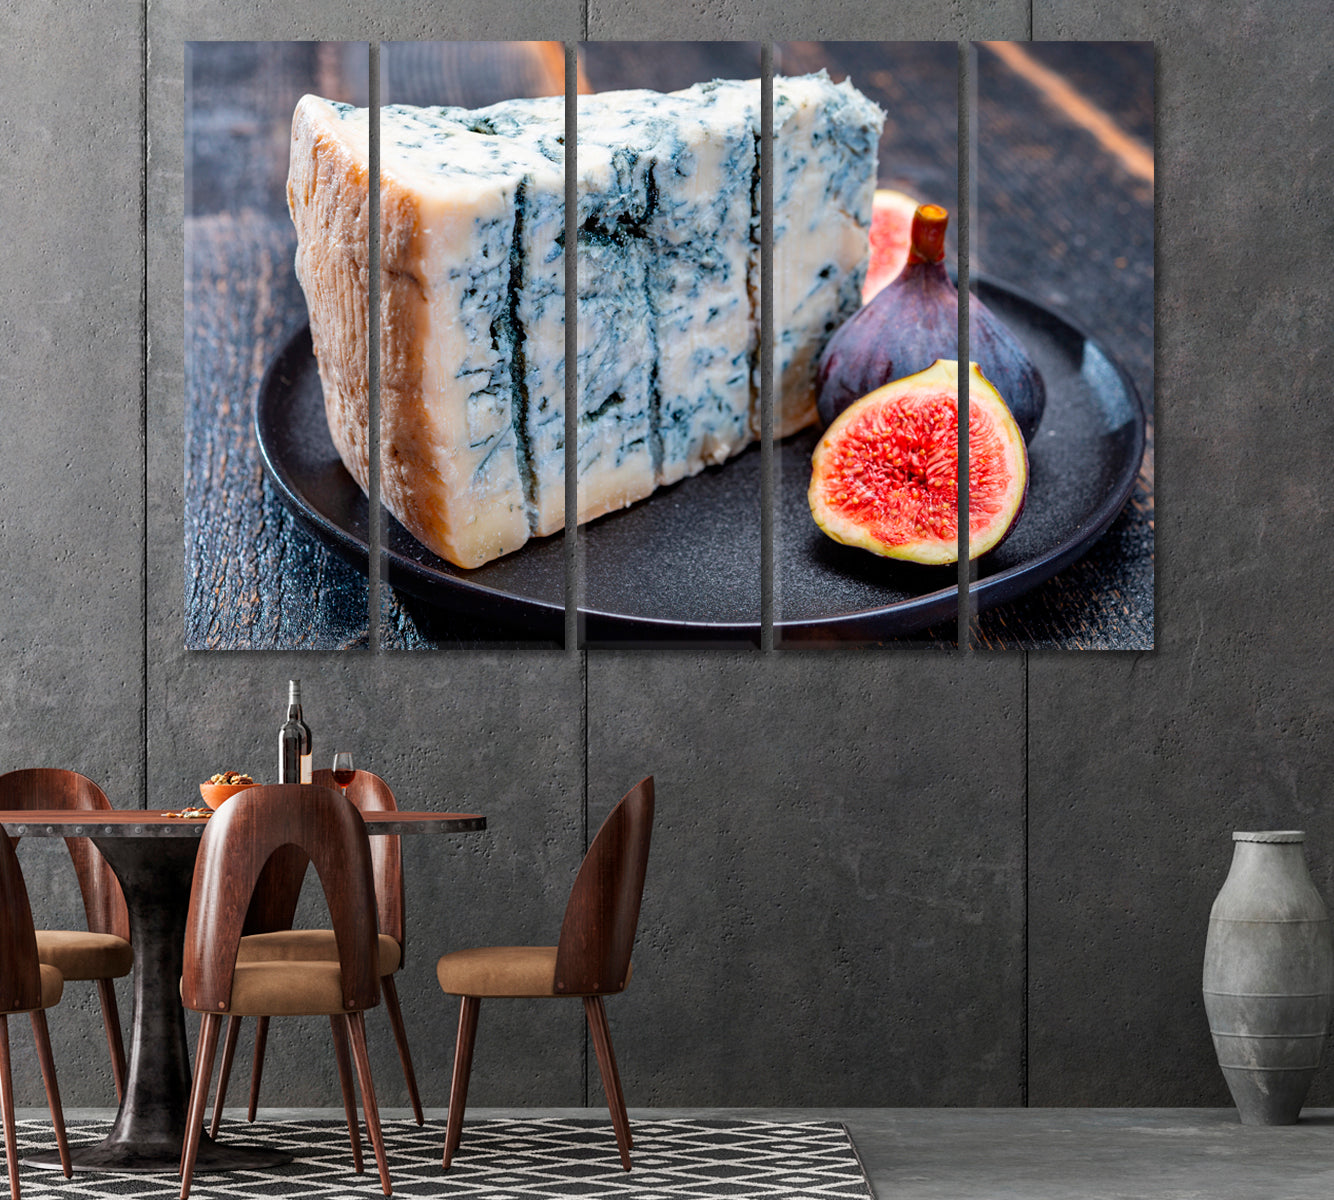 Gorgonzola Cheese and Figs Canvas Print-Canvas Print-CetArt-1 Panel-24x16 inches-CetArt